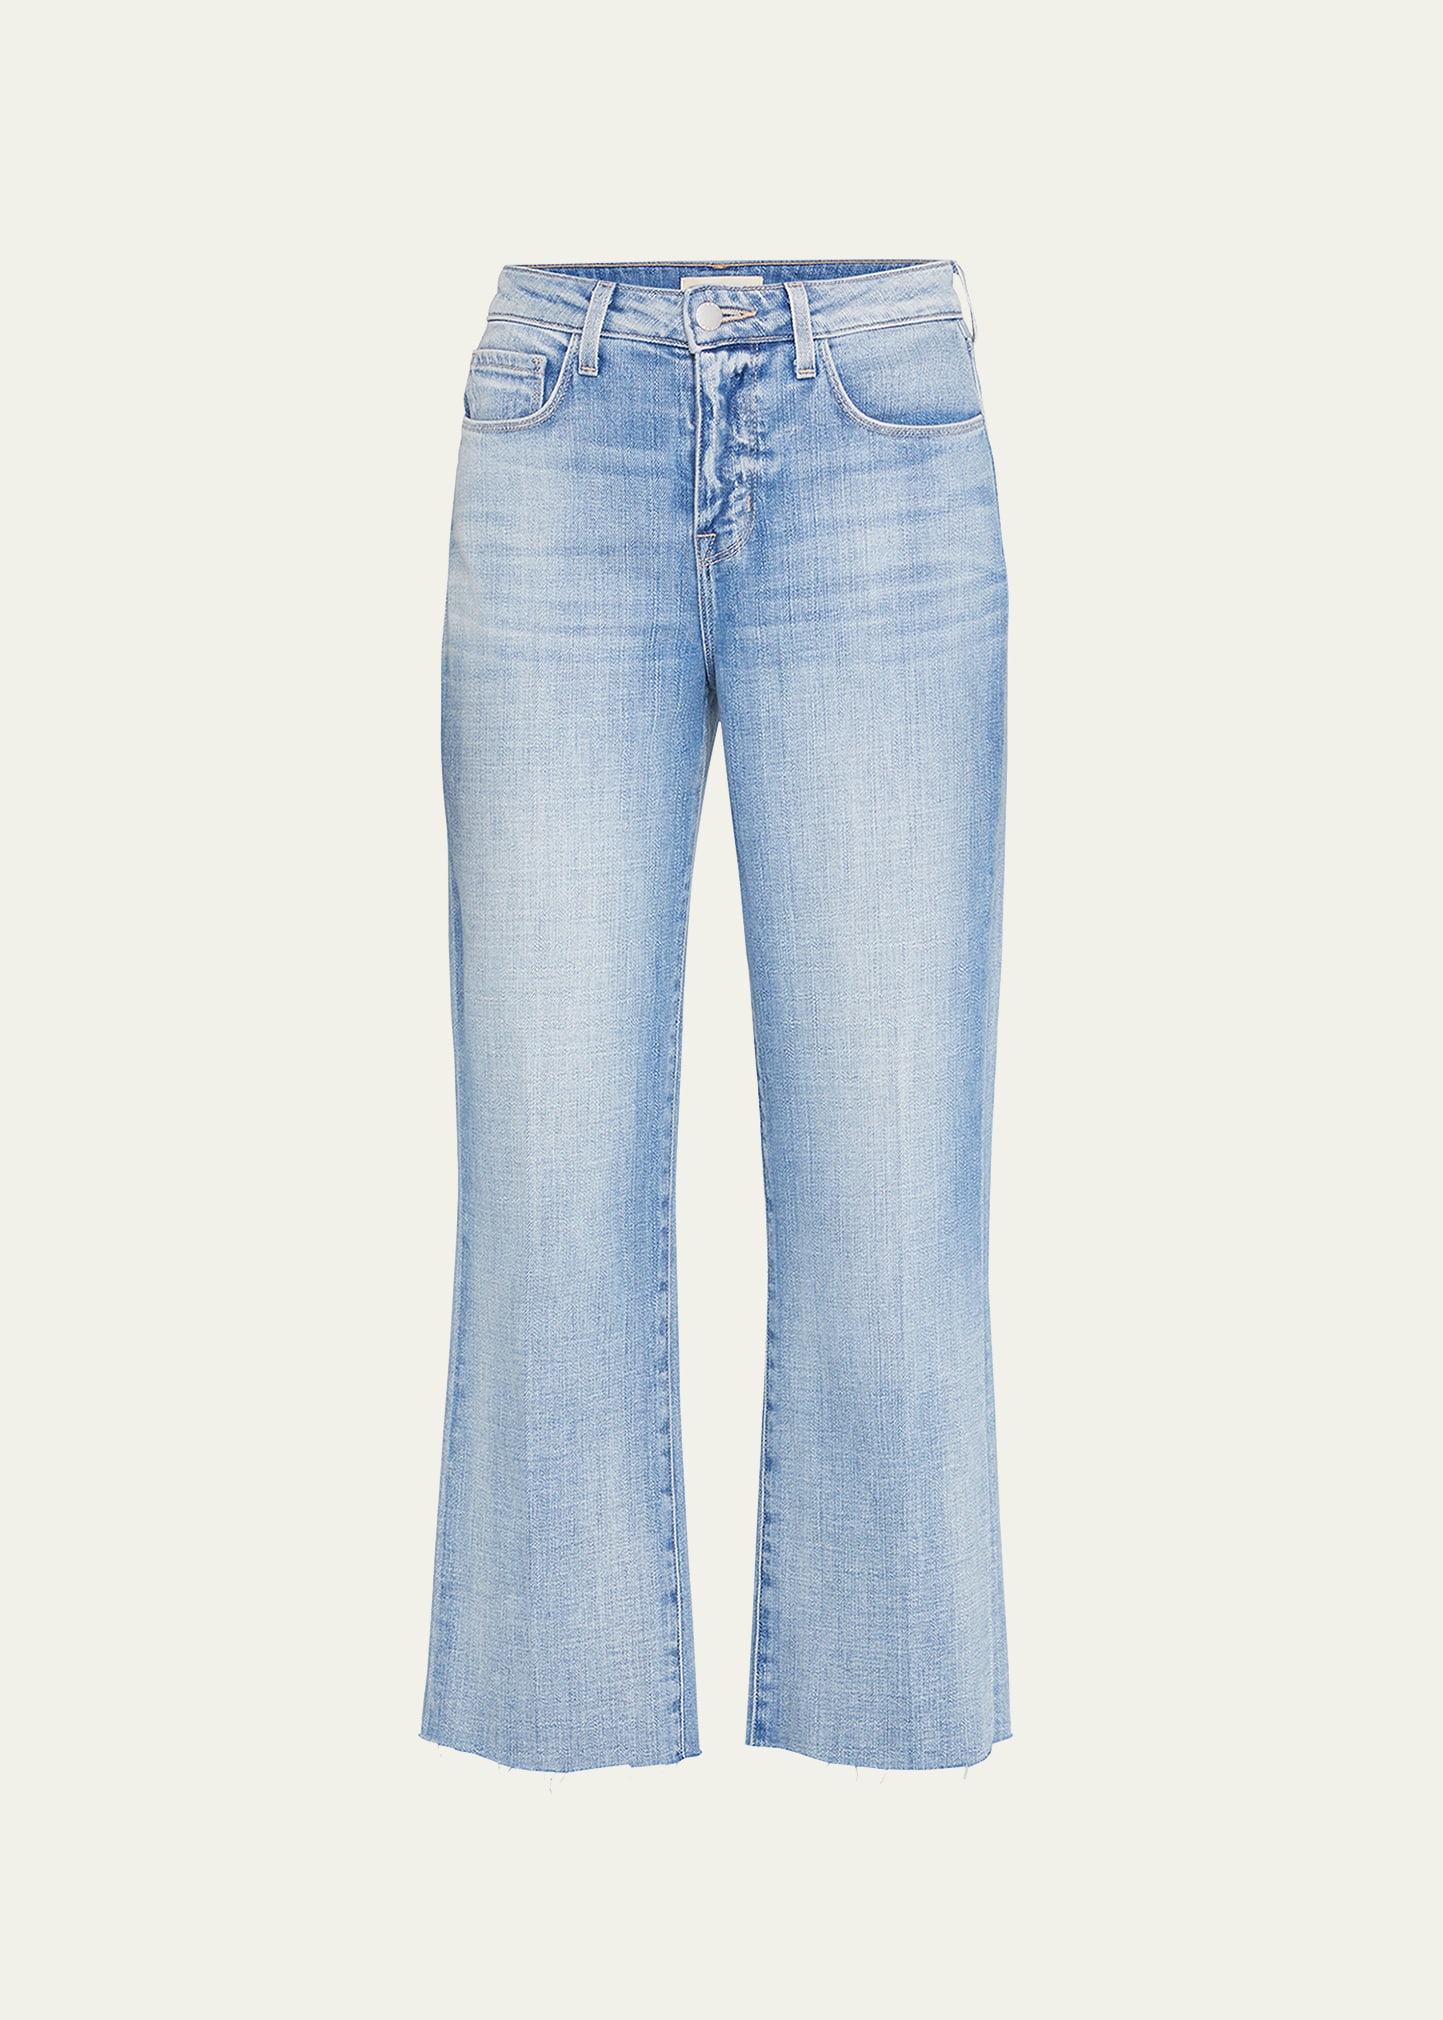 L'Agence Wanda High-Rise Crop Wide-Leg Jeans